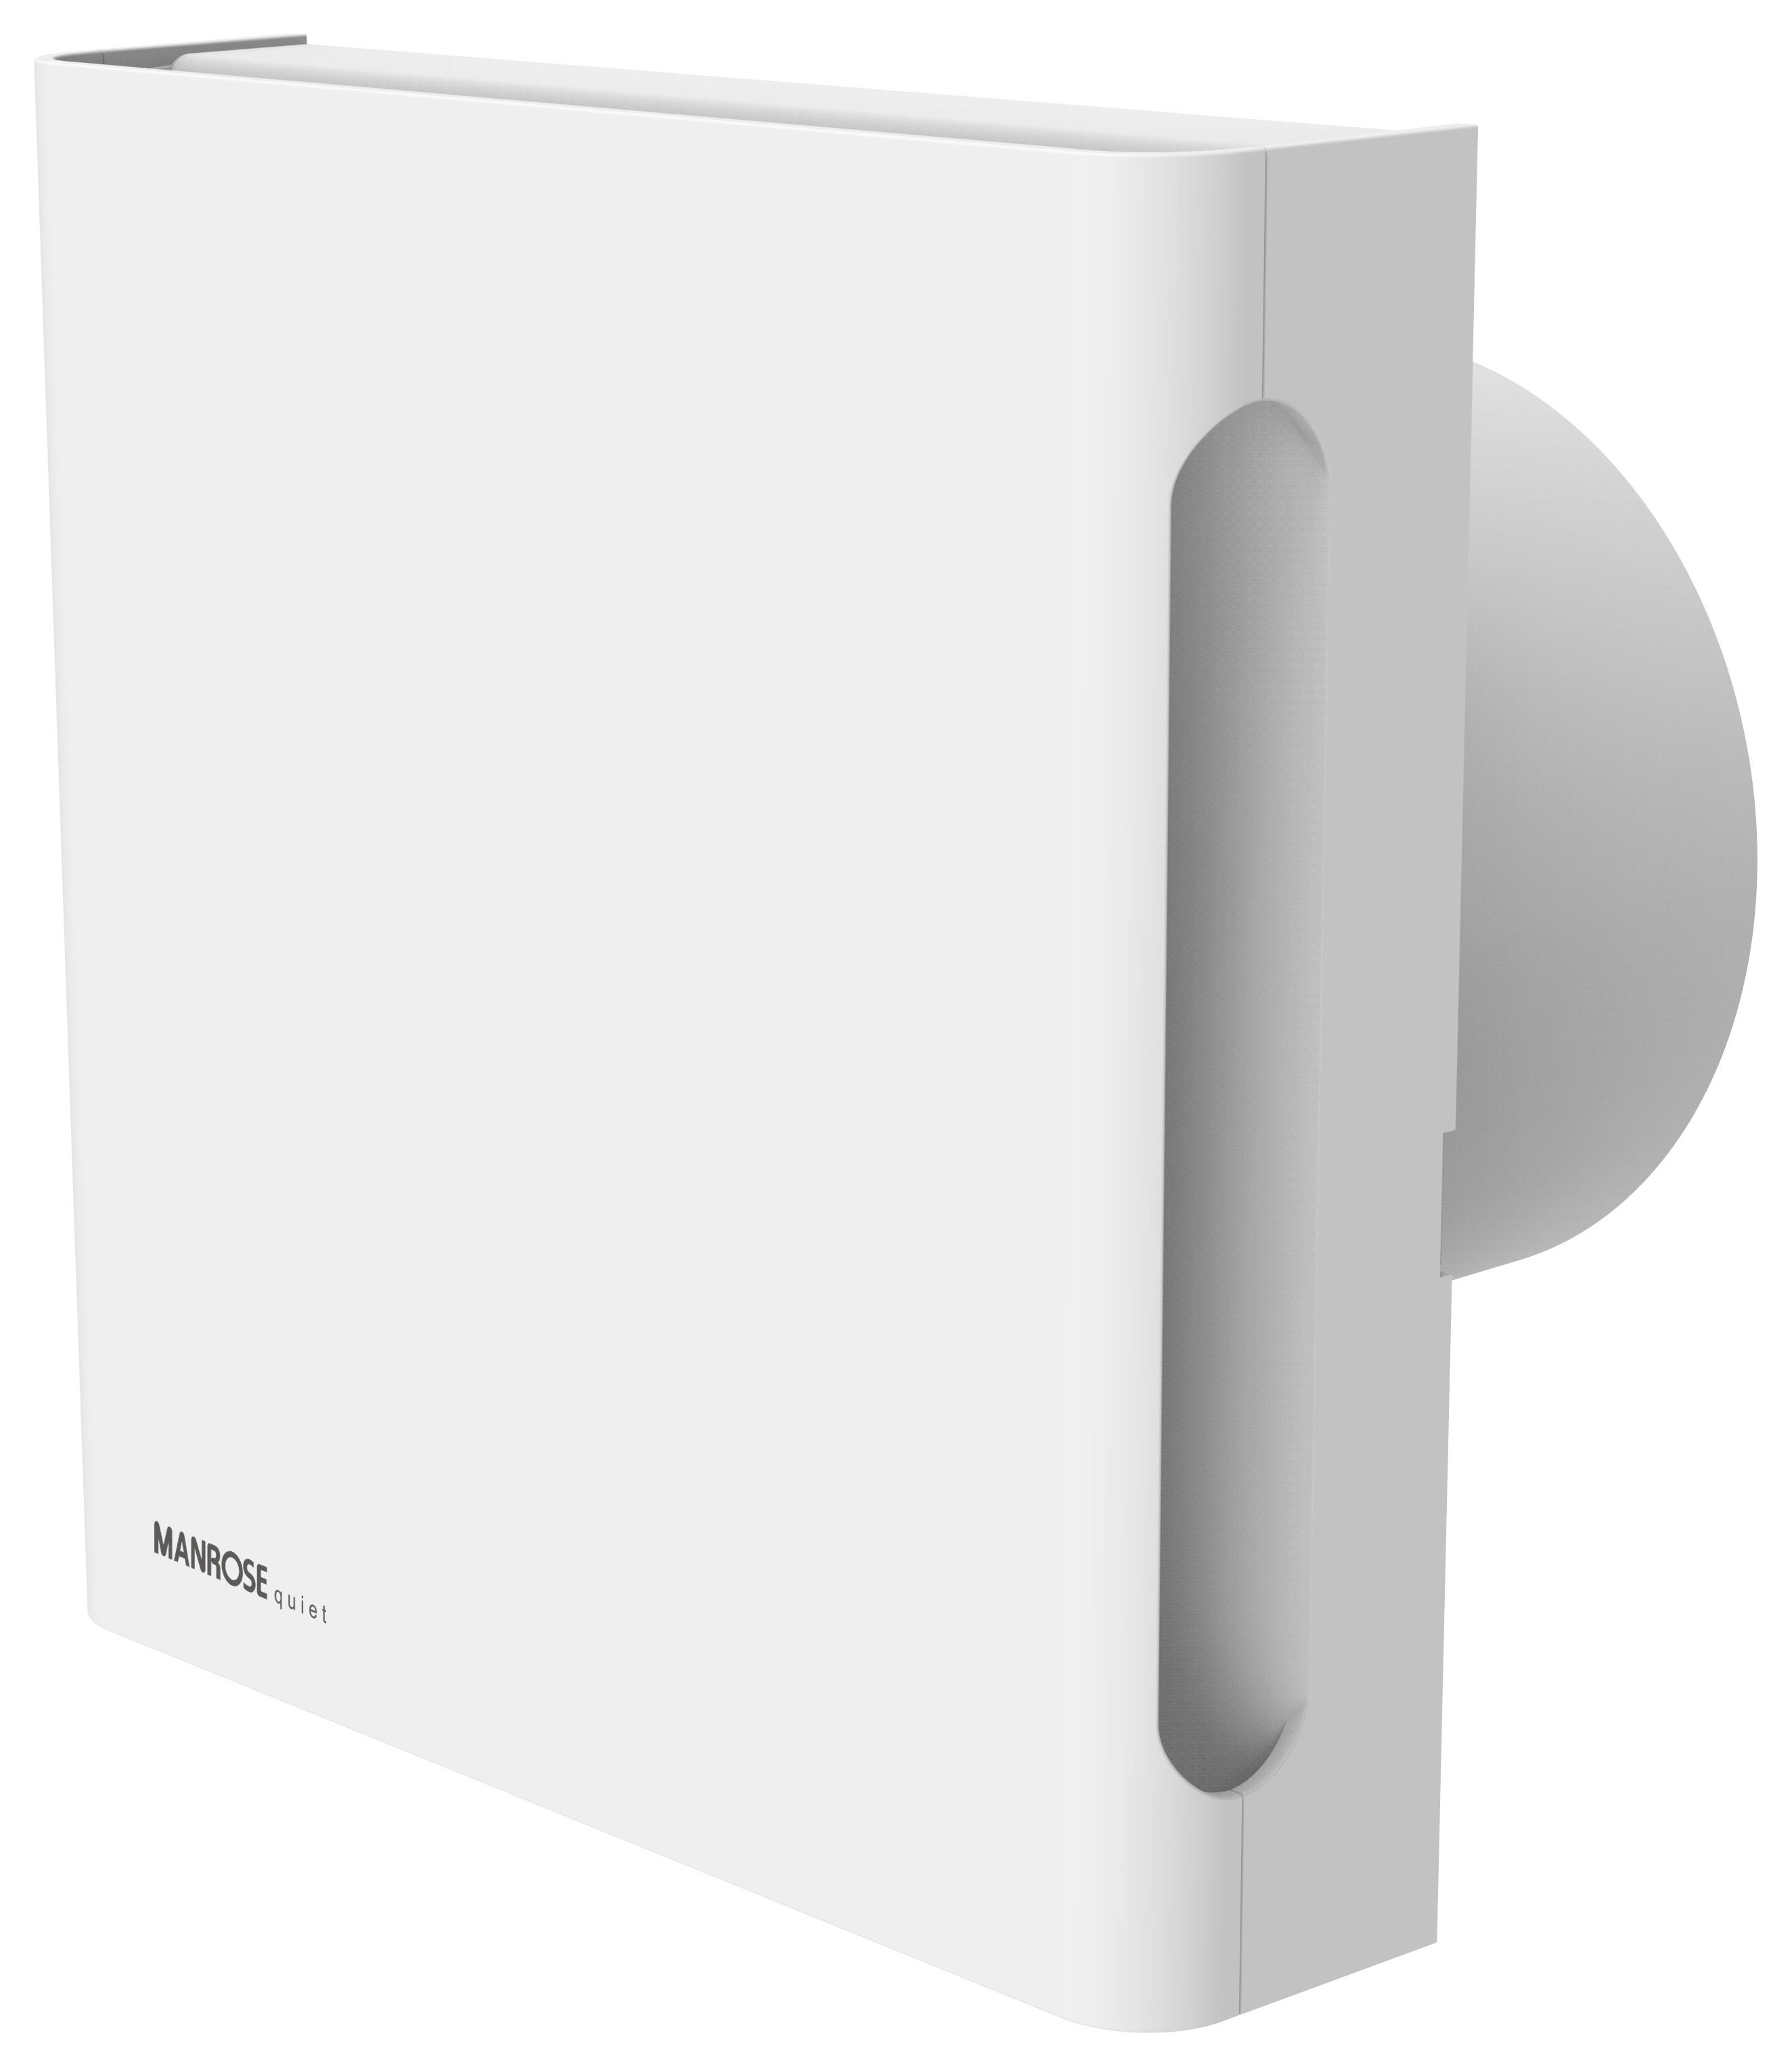 Manrose IPX5 Humidity Quiet Bathroom Fan